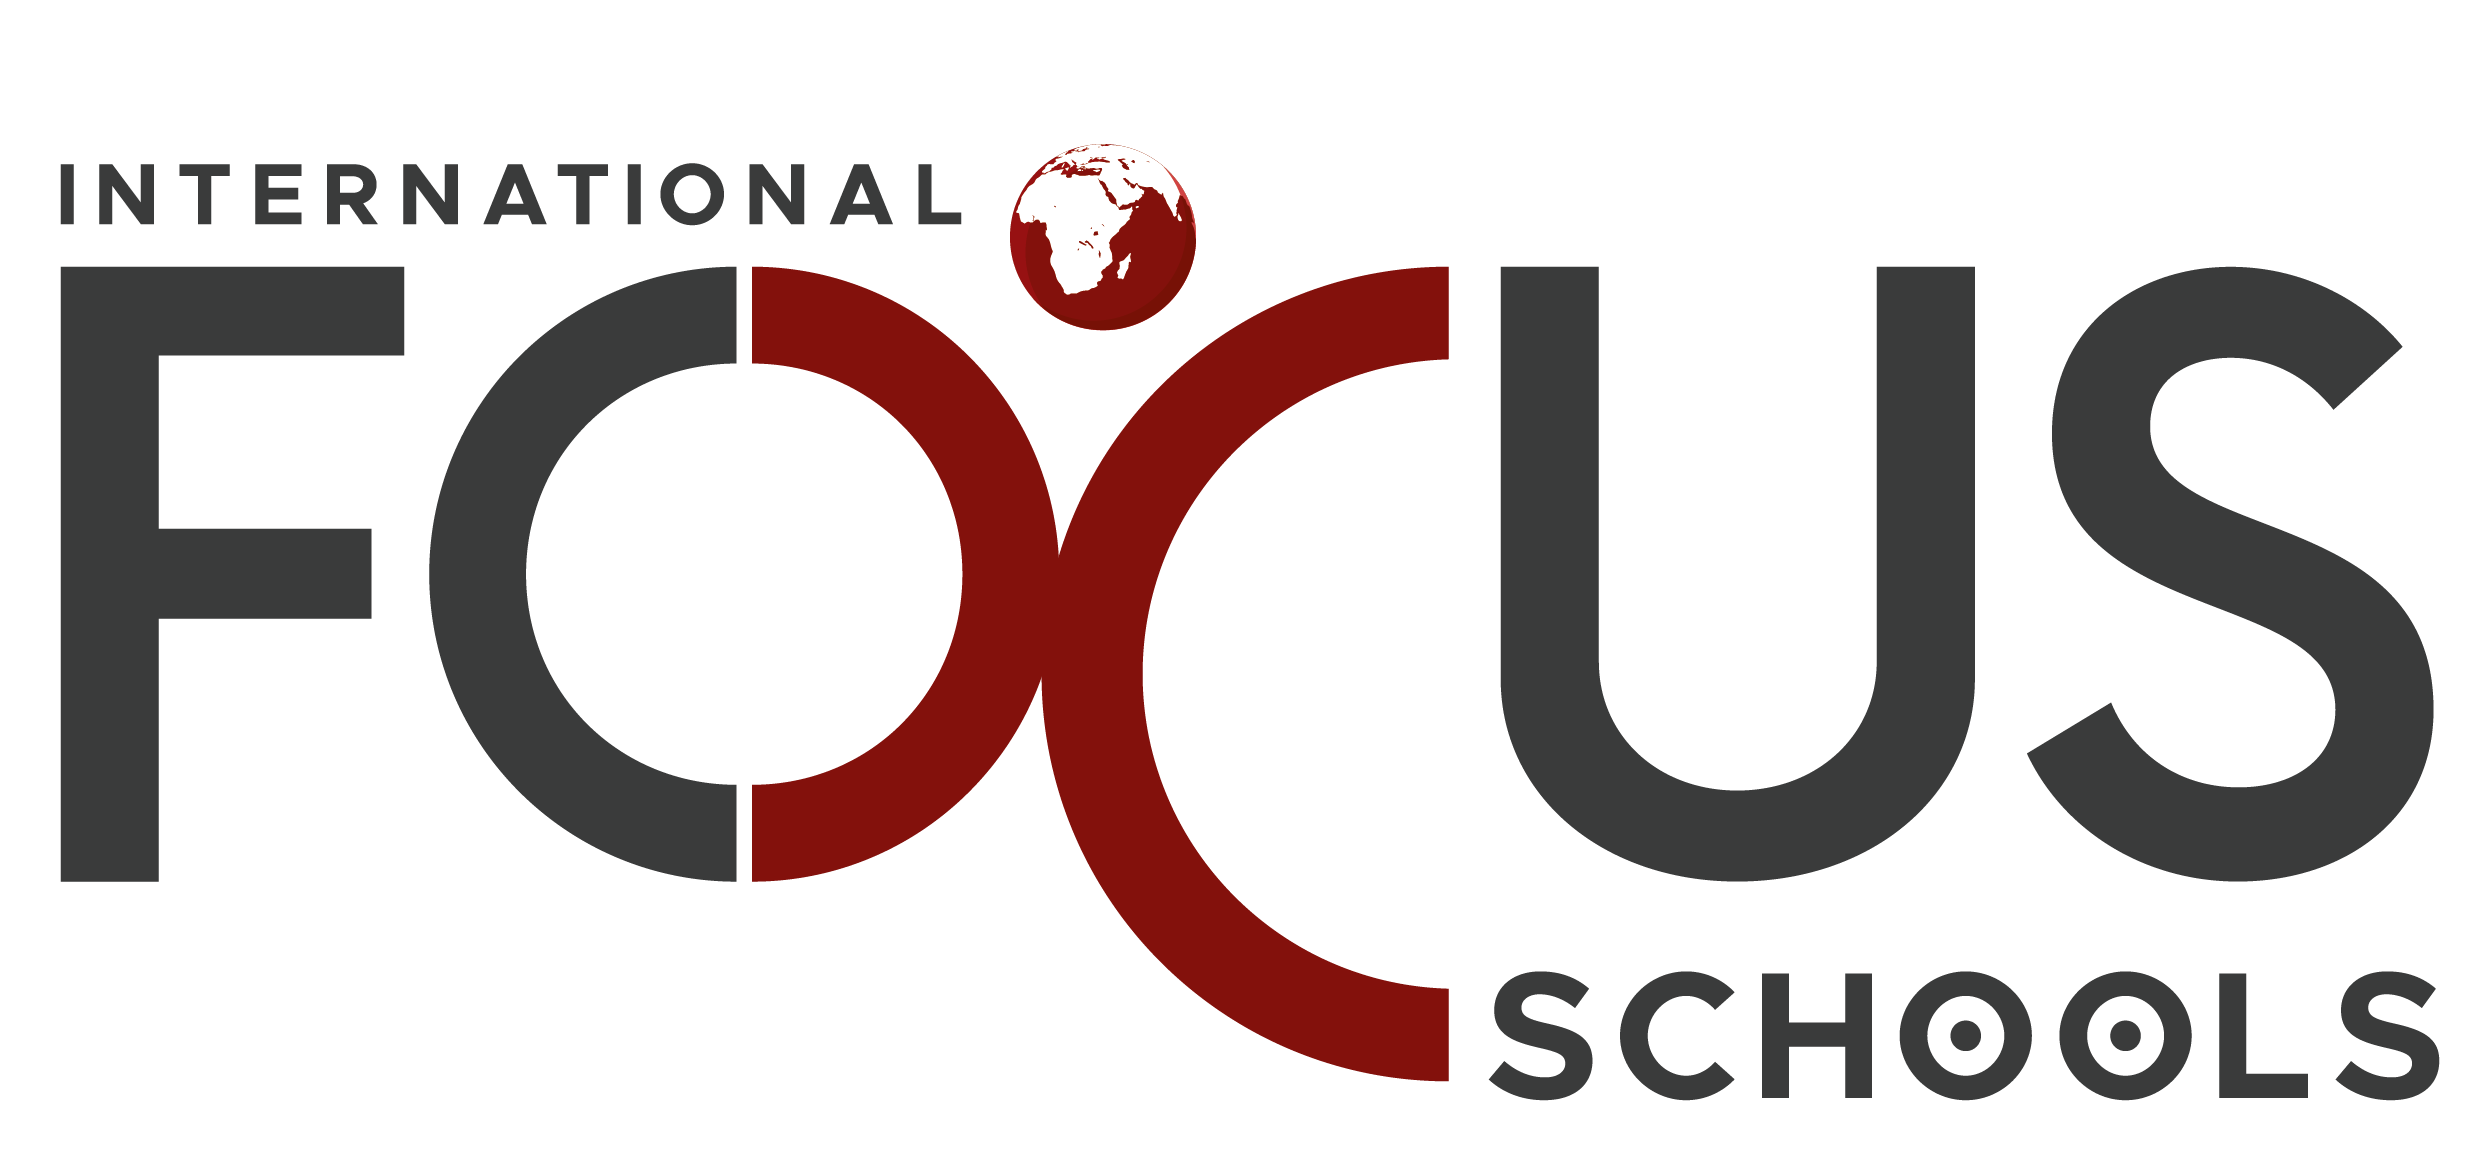 International Focus Schools